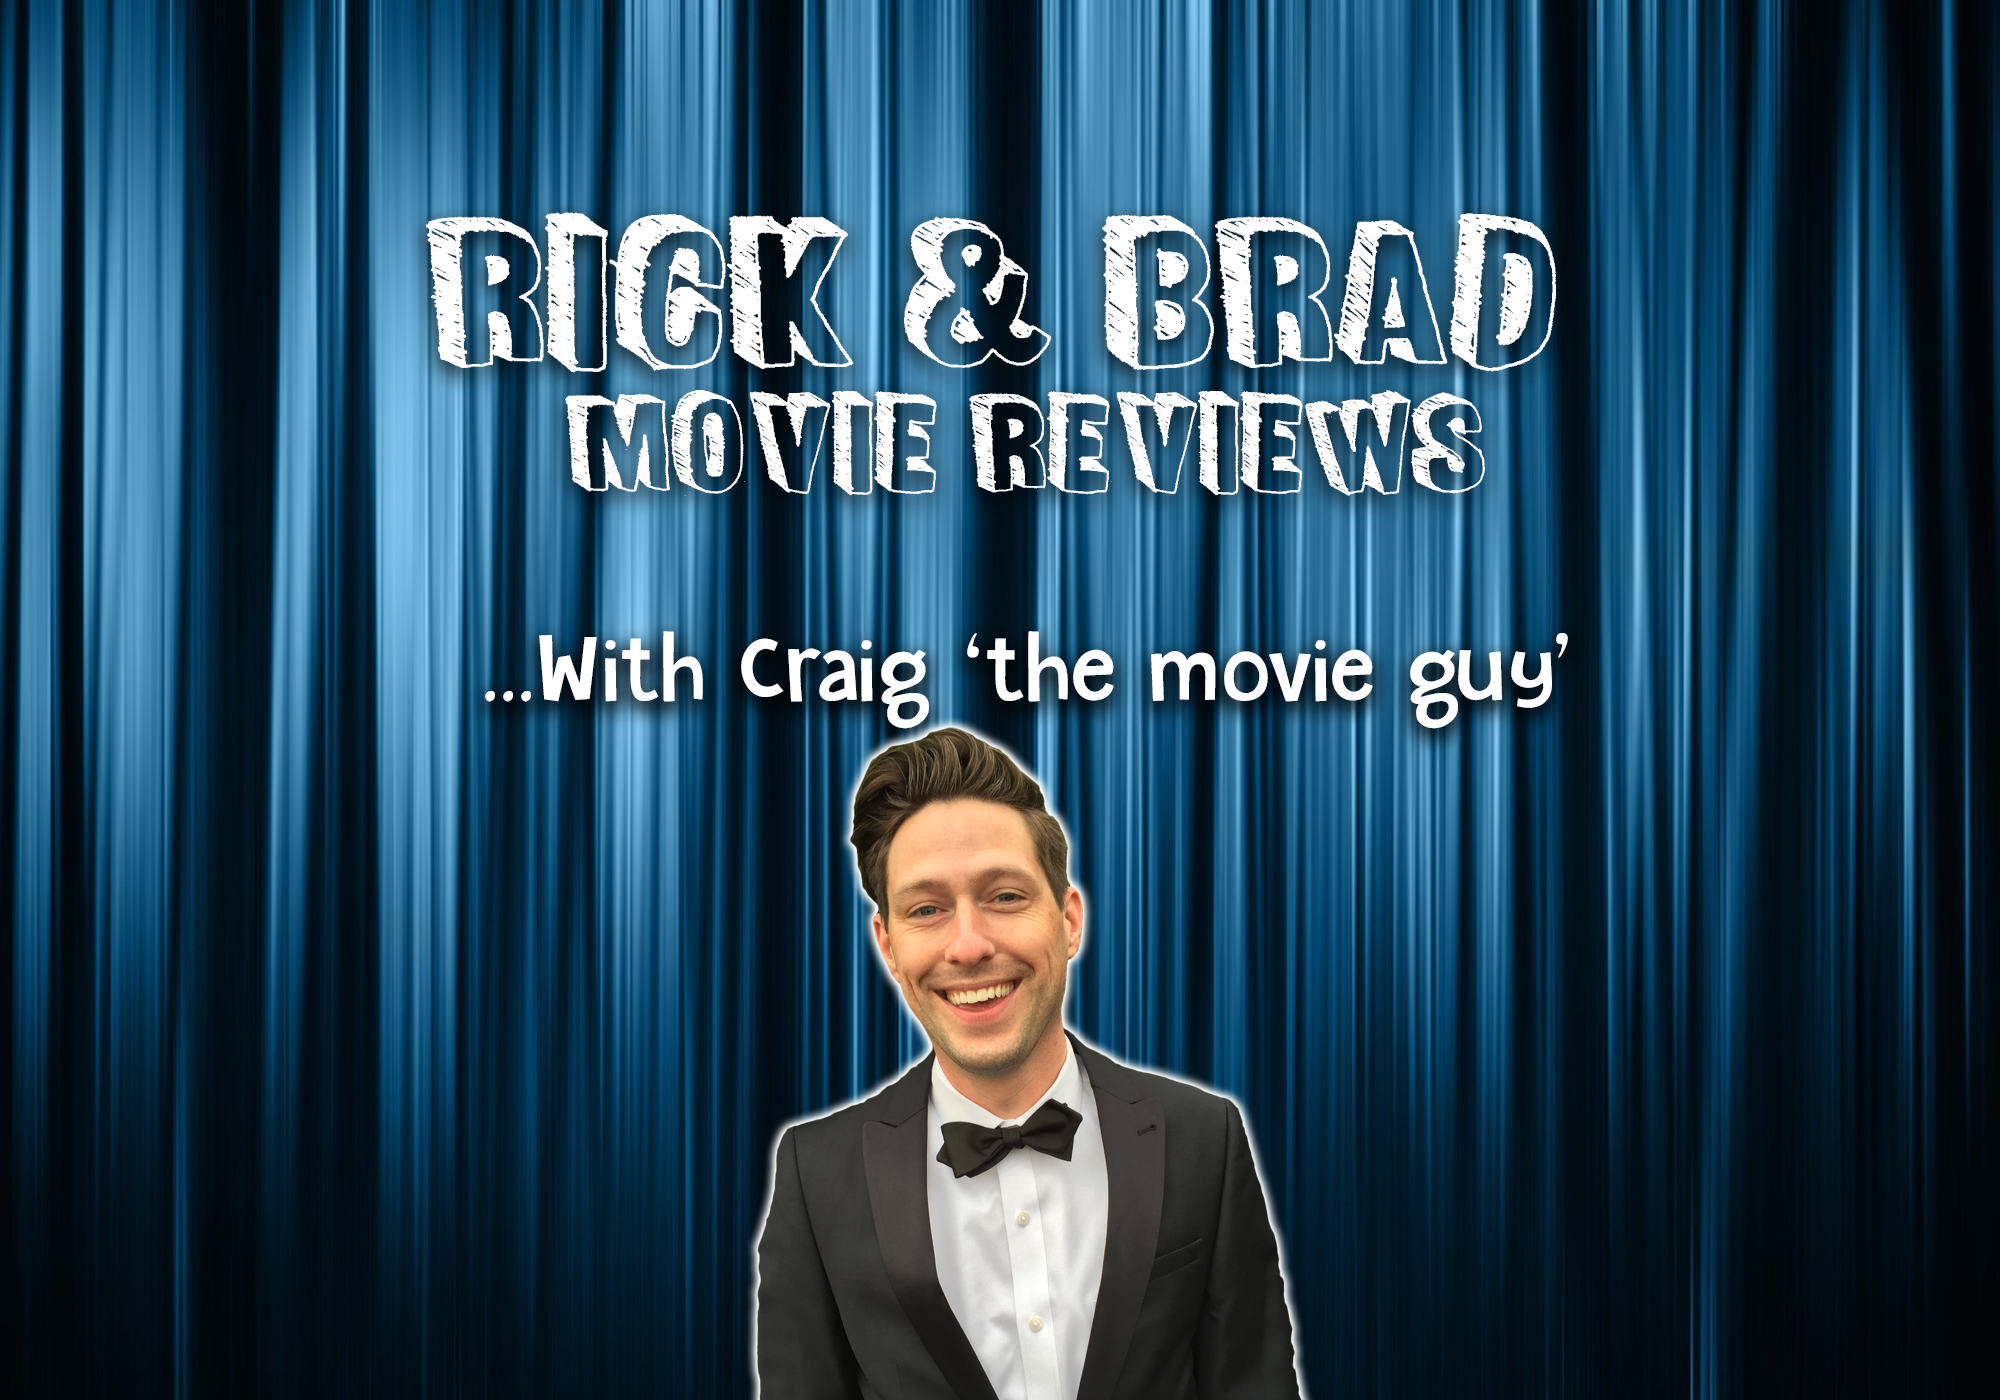 10-22 Movie Reviews with Craig 'The Movie Guy'